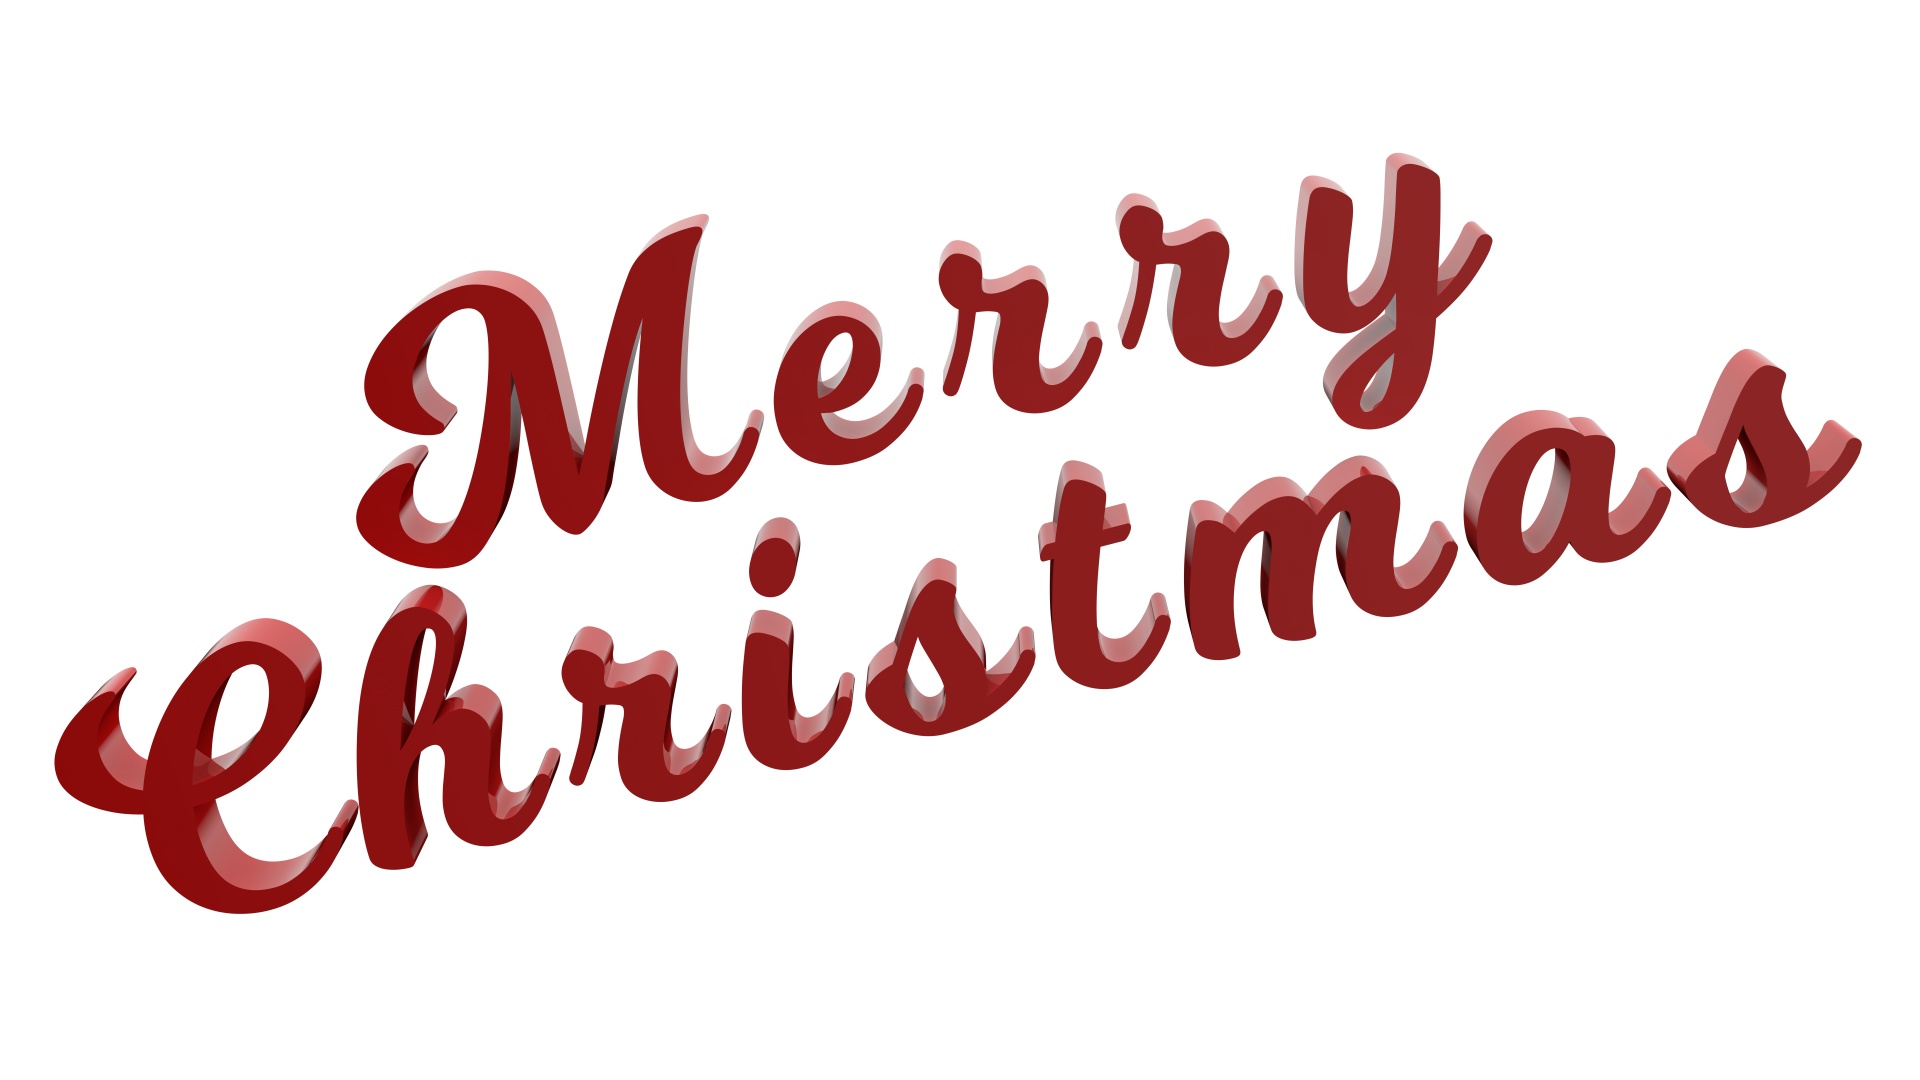 merry christmas calligraphic text free photo